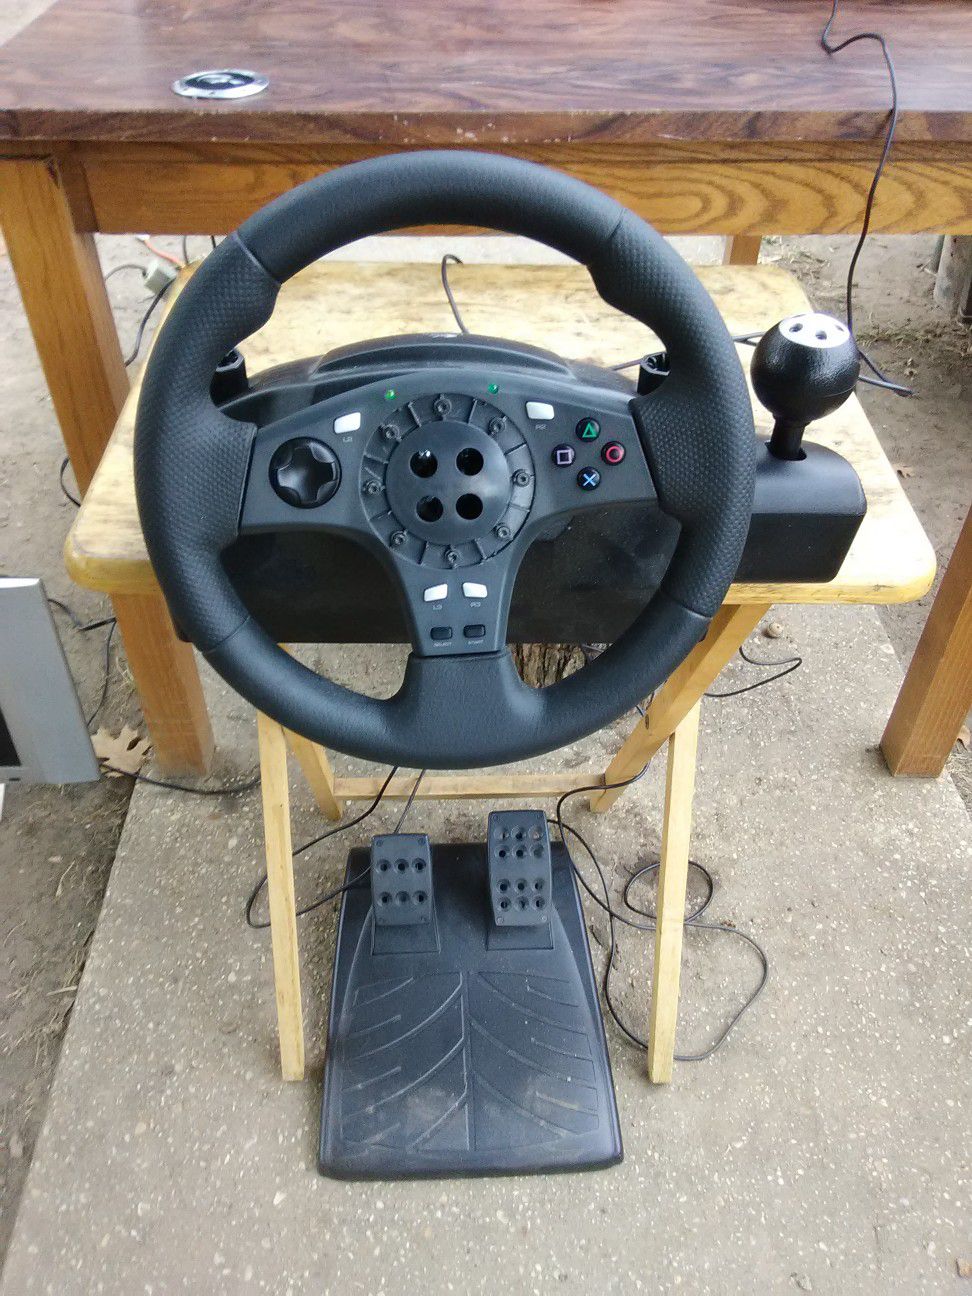 Logitech racing Wheel for PS3 $100